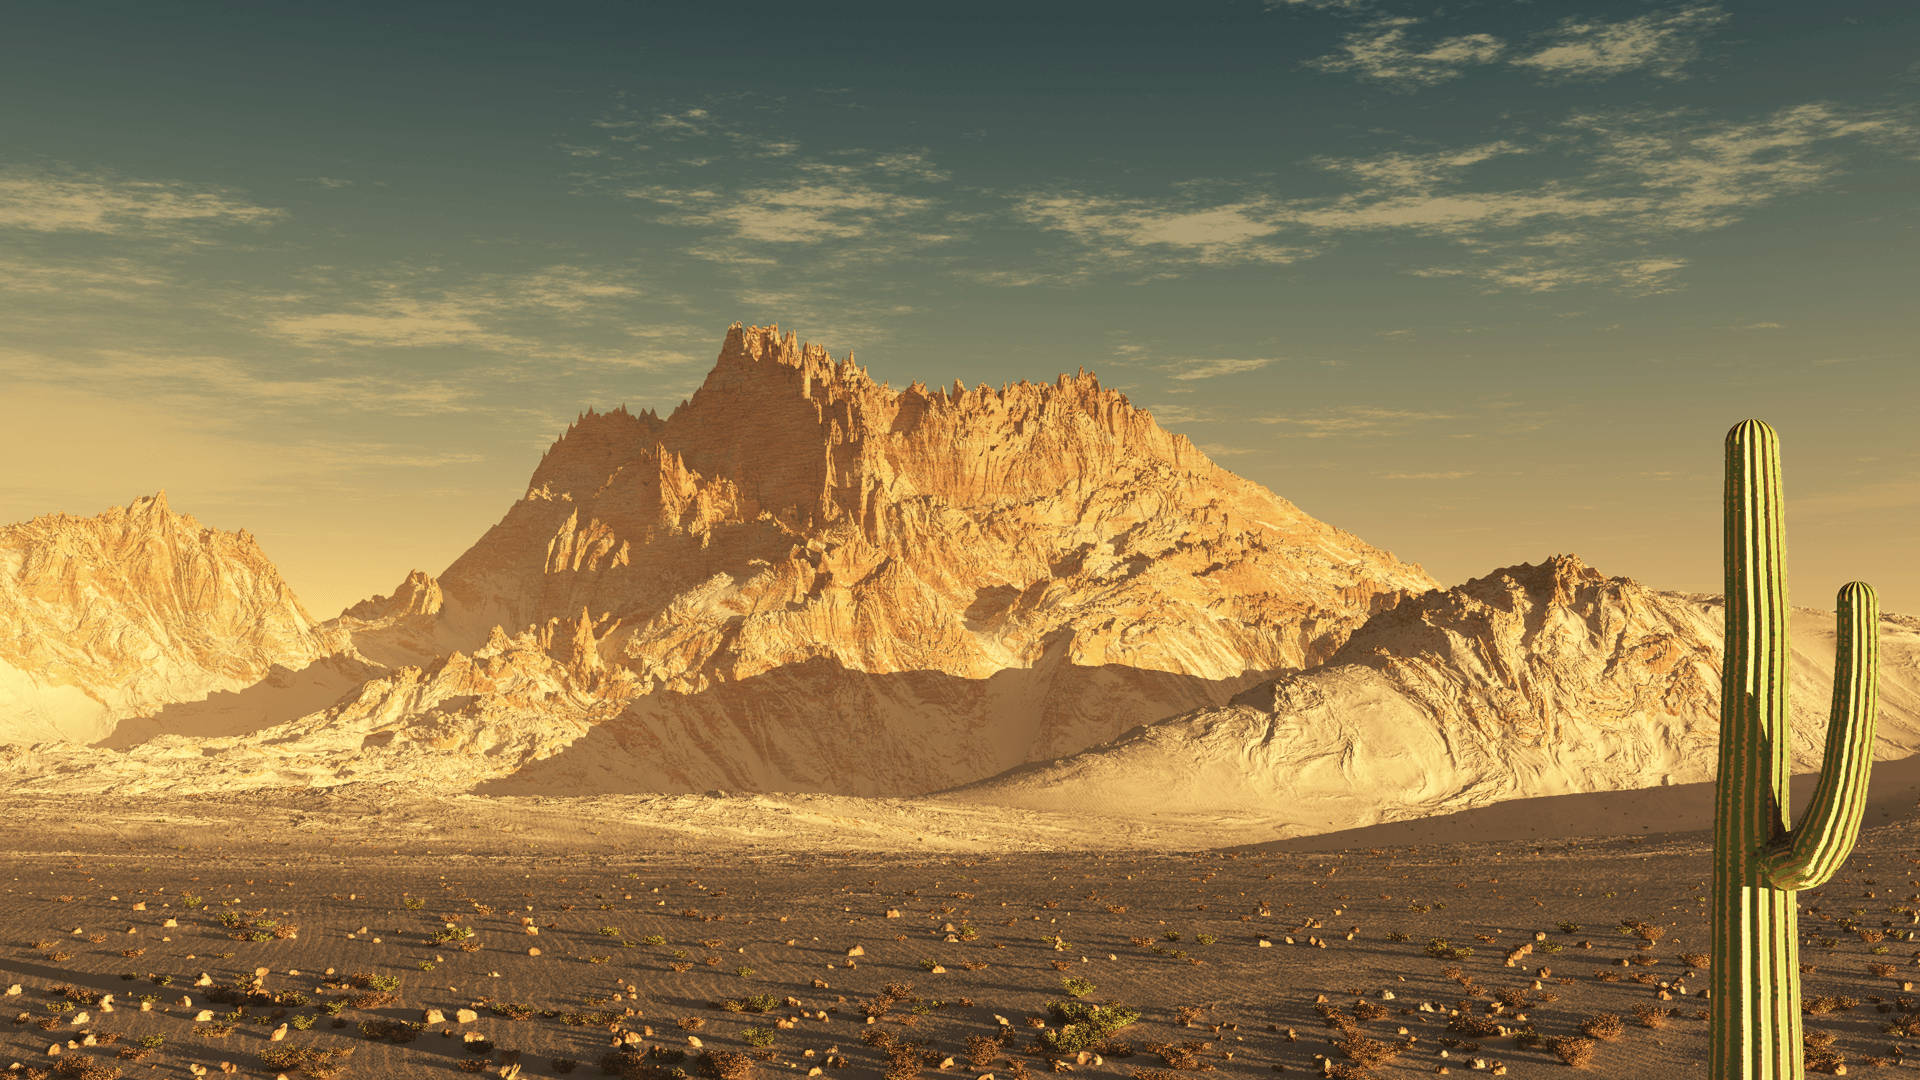 A Lone Cactus in a Desert Mountain Landscape Wallpaper